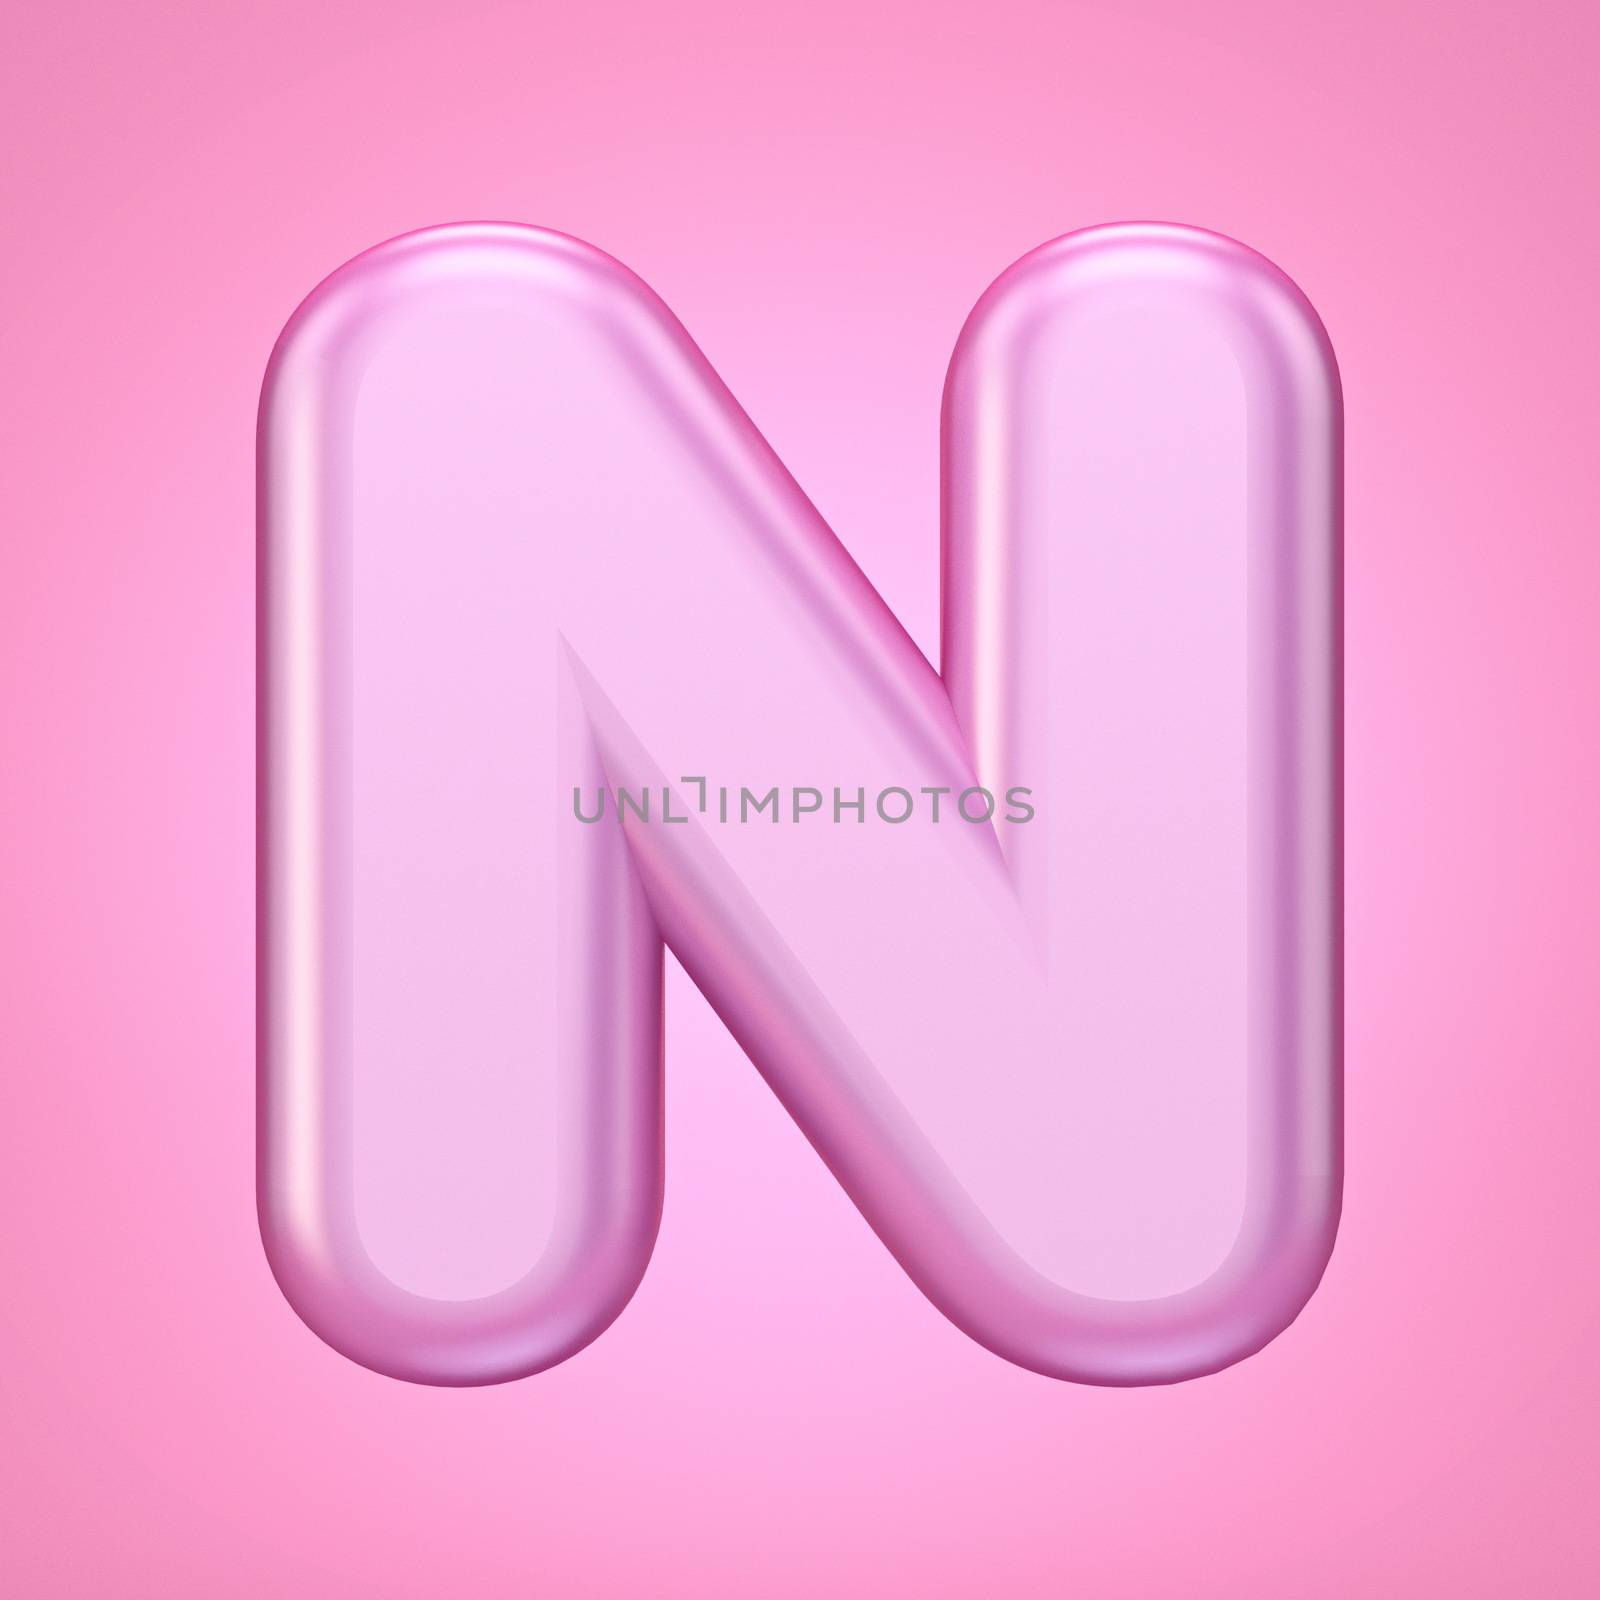 Pink font Letter N 3D rendering illustration isolated on white background